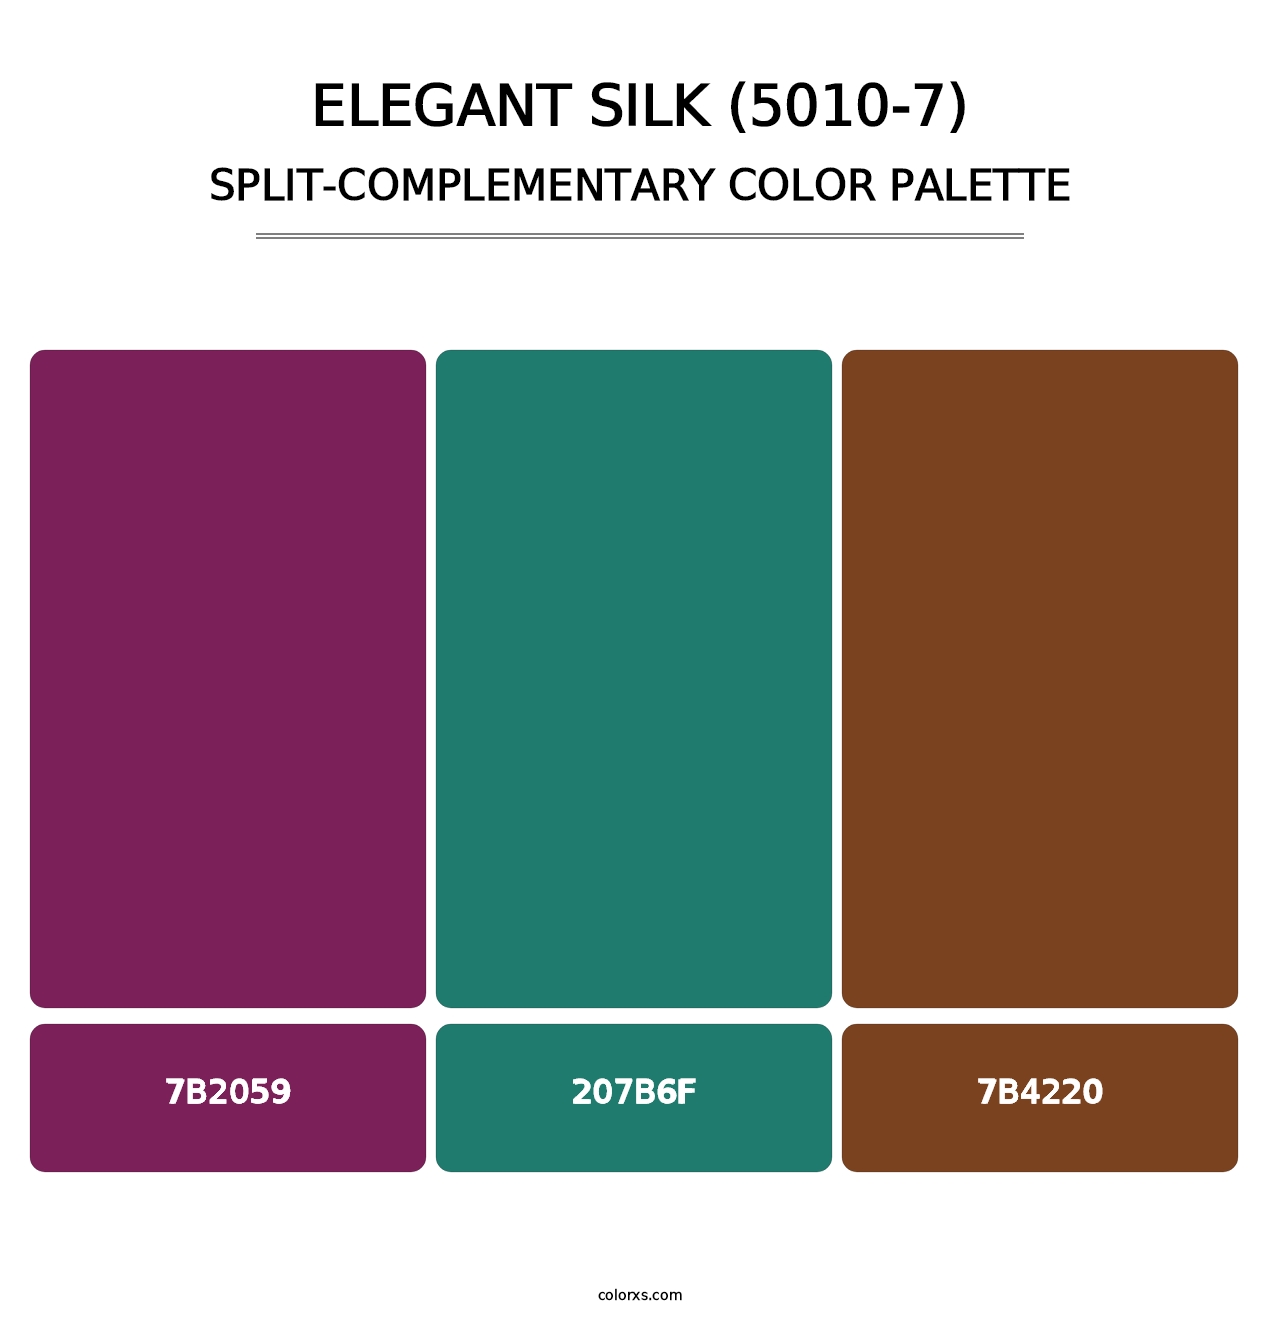 Elegant Silk (5010-7) - Split-Complementary Color Palette